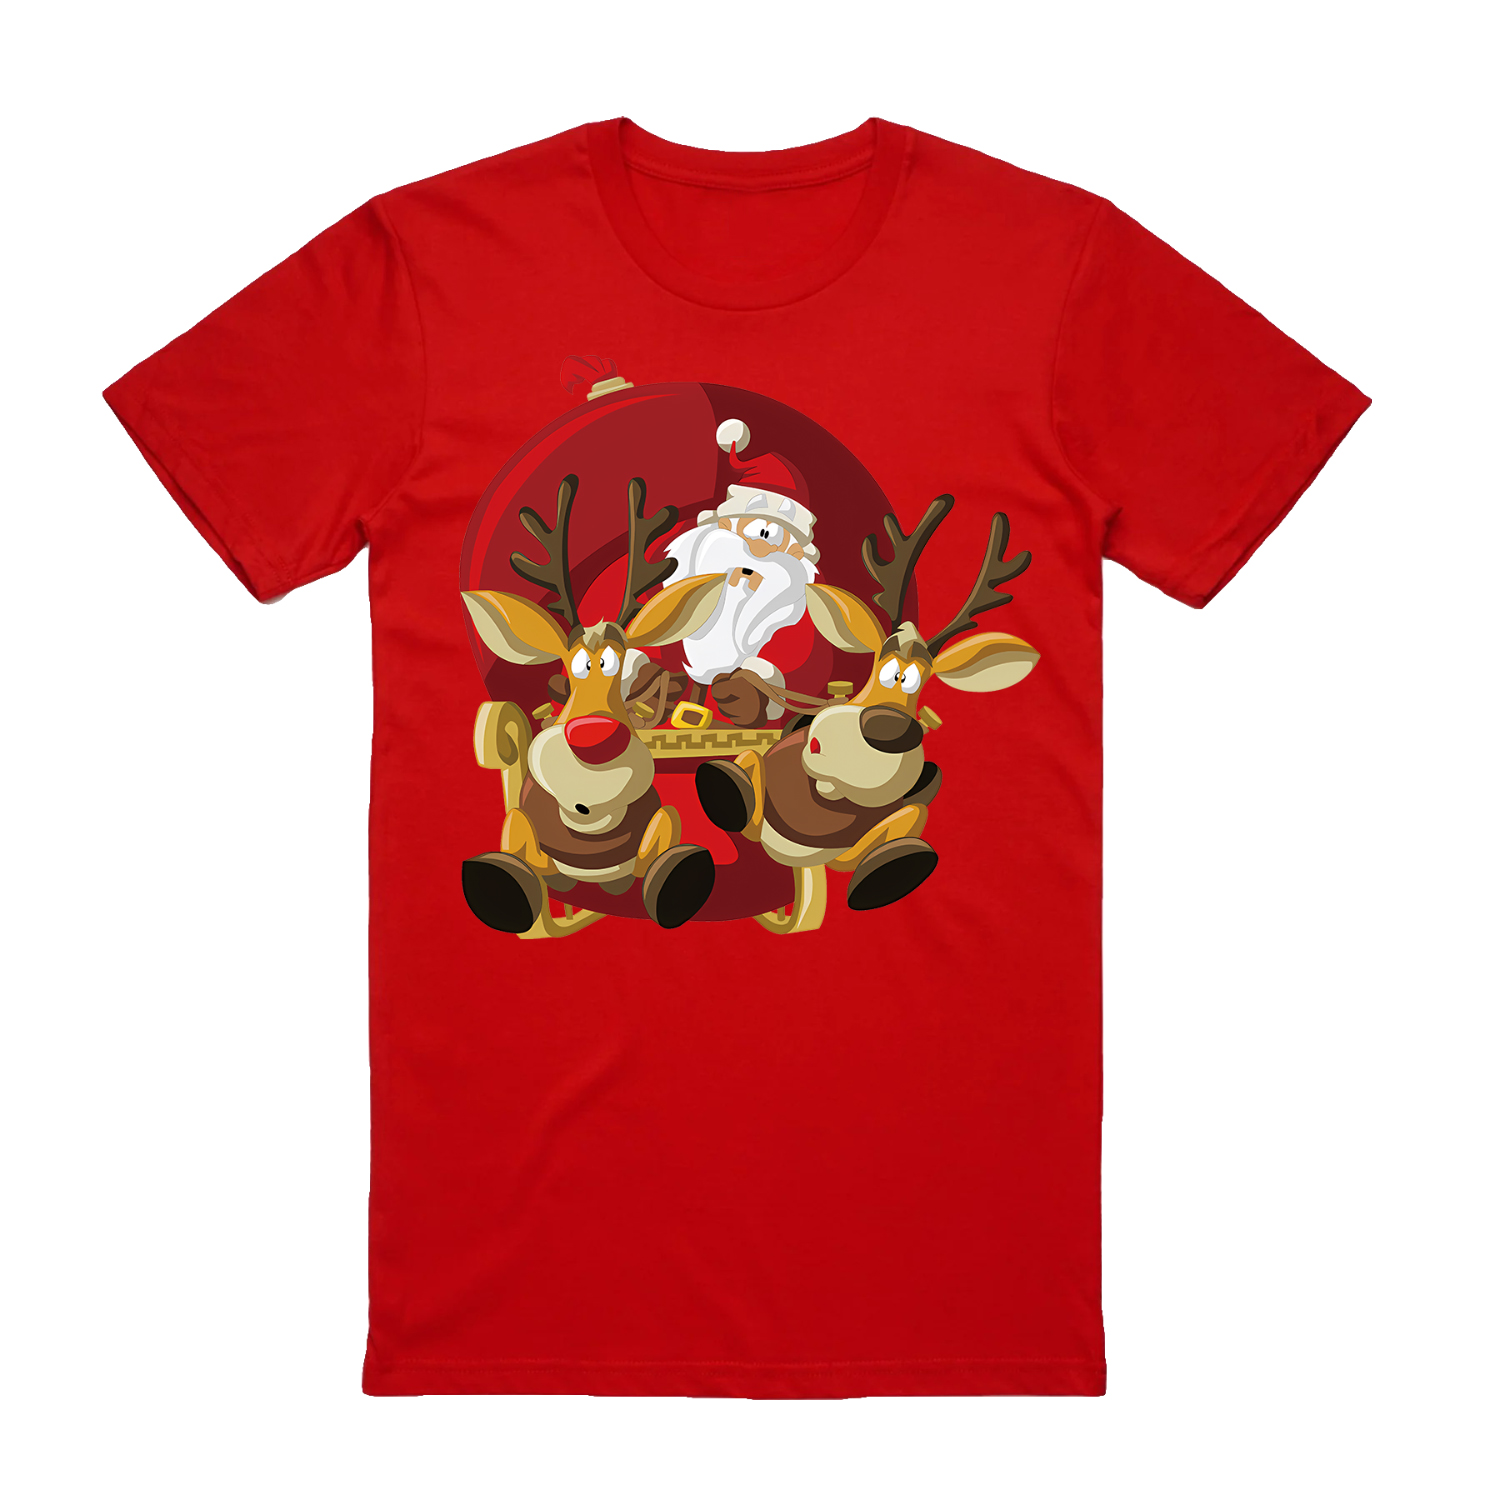 100% Cotton Christmas T-shirt Adult Unisex Tee Tops - Santas Sleigh